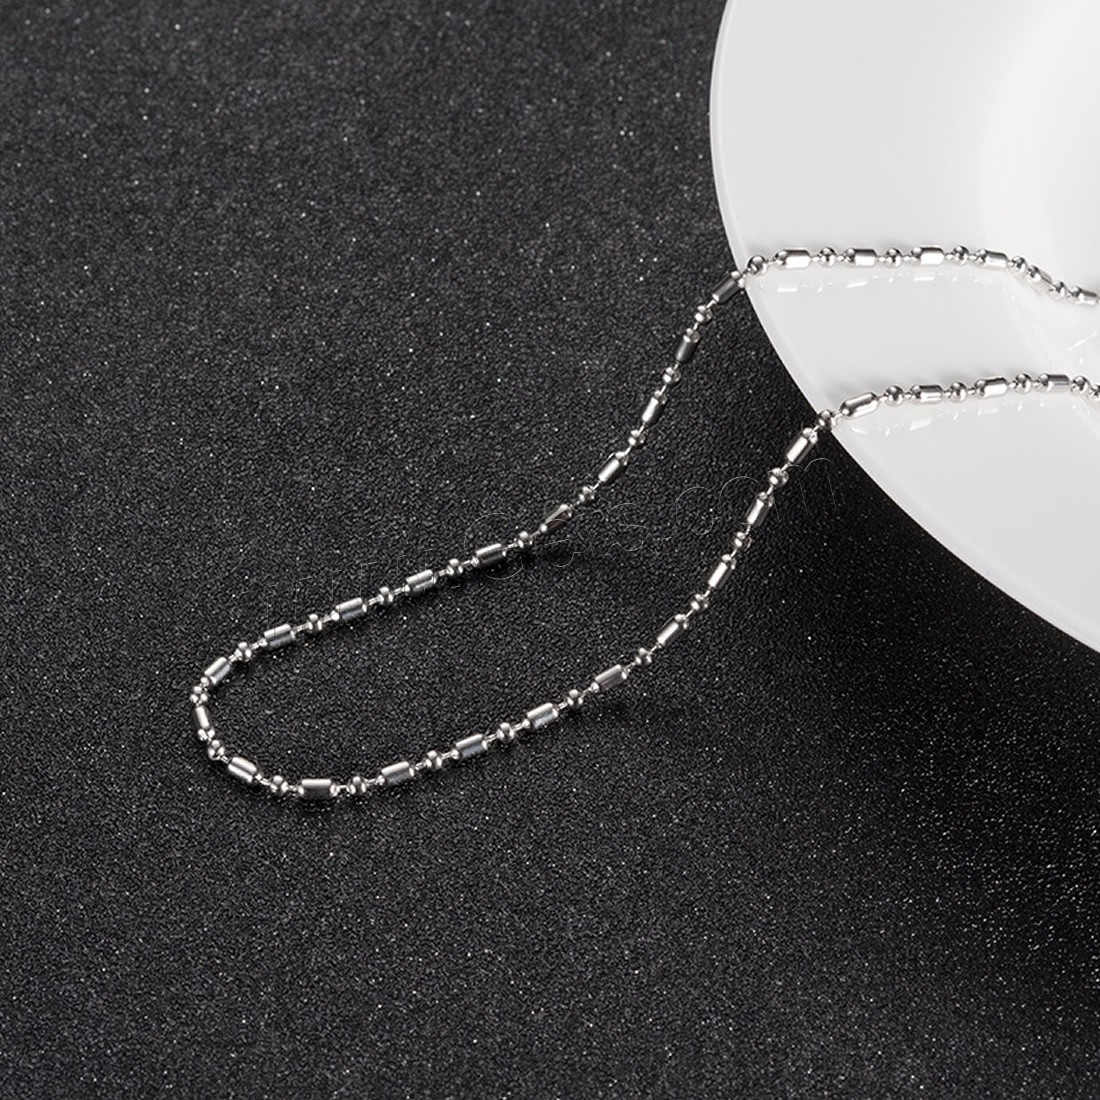 Titanium Steel Chain Necklace, Unisex & different size for choice, original color, Length:Approx 21.6 Inch, Approx 23.6 Inch, Approx 25.5 Inch, Sold By Strand